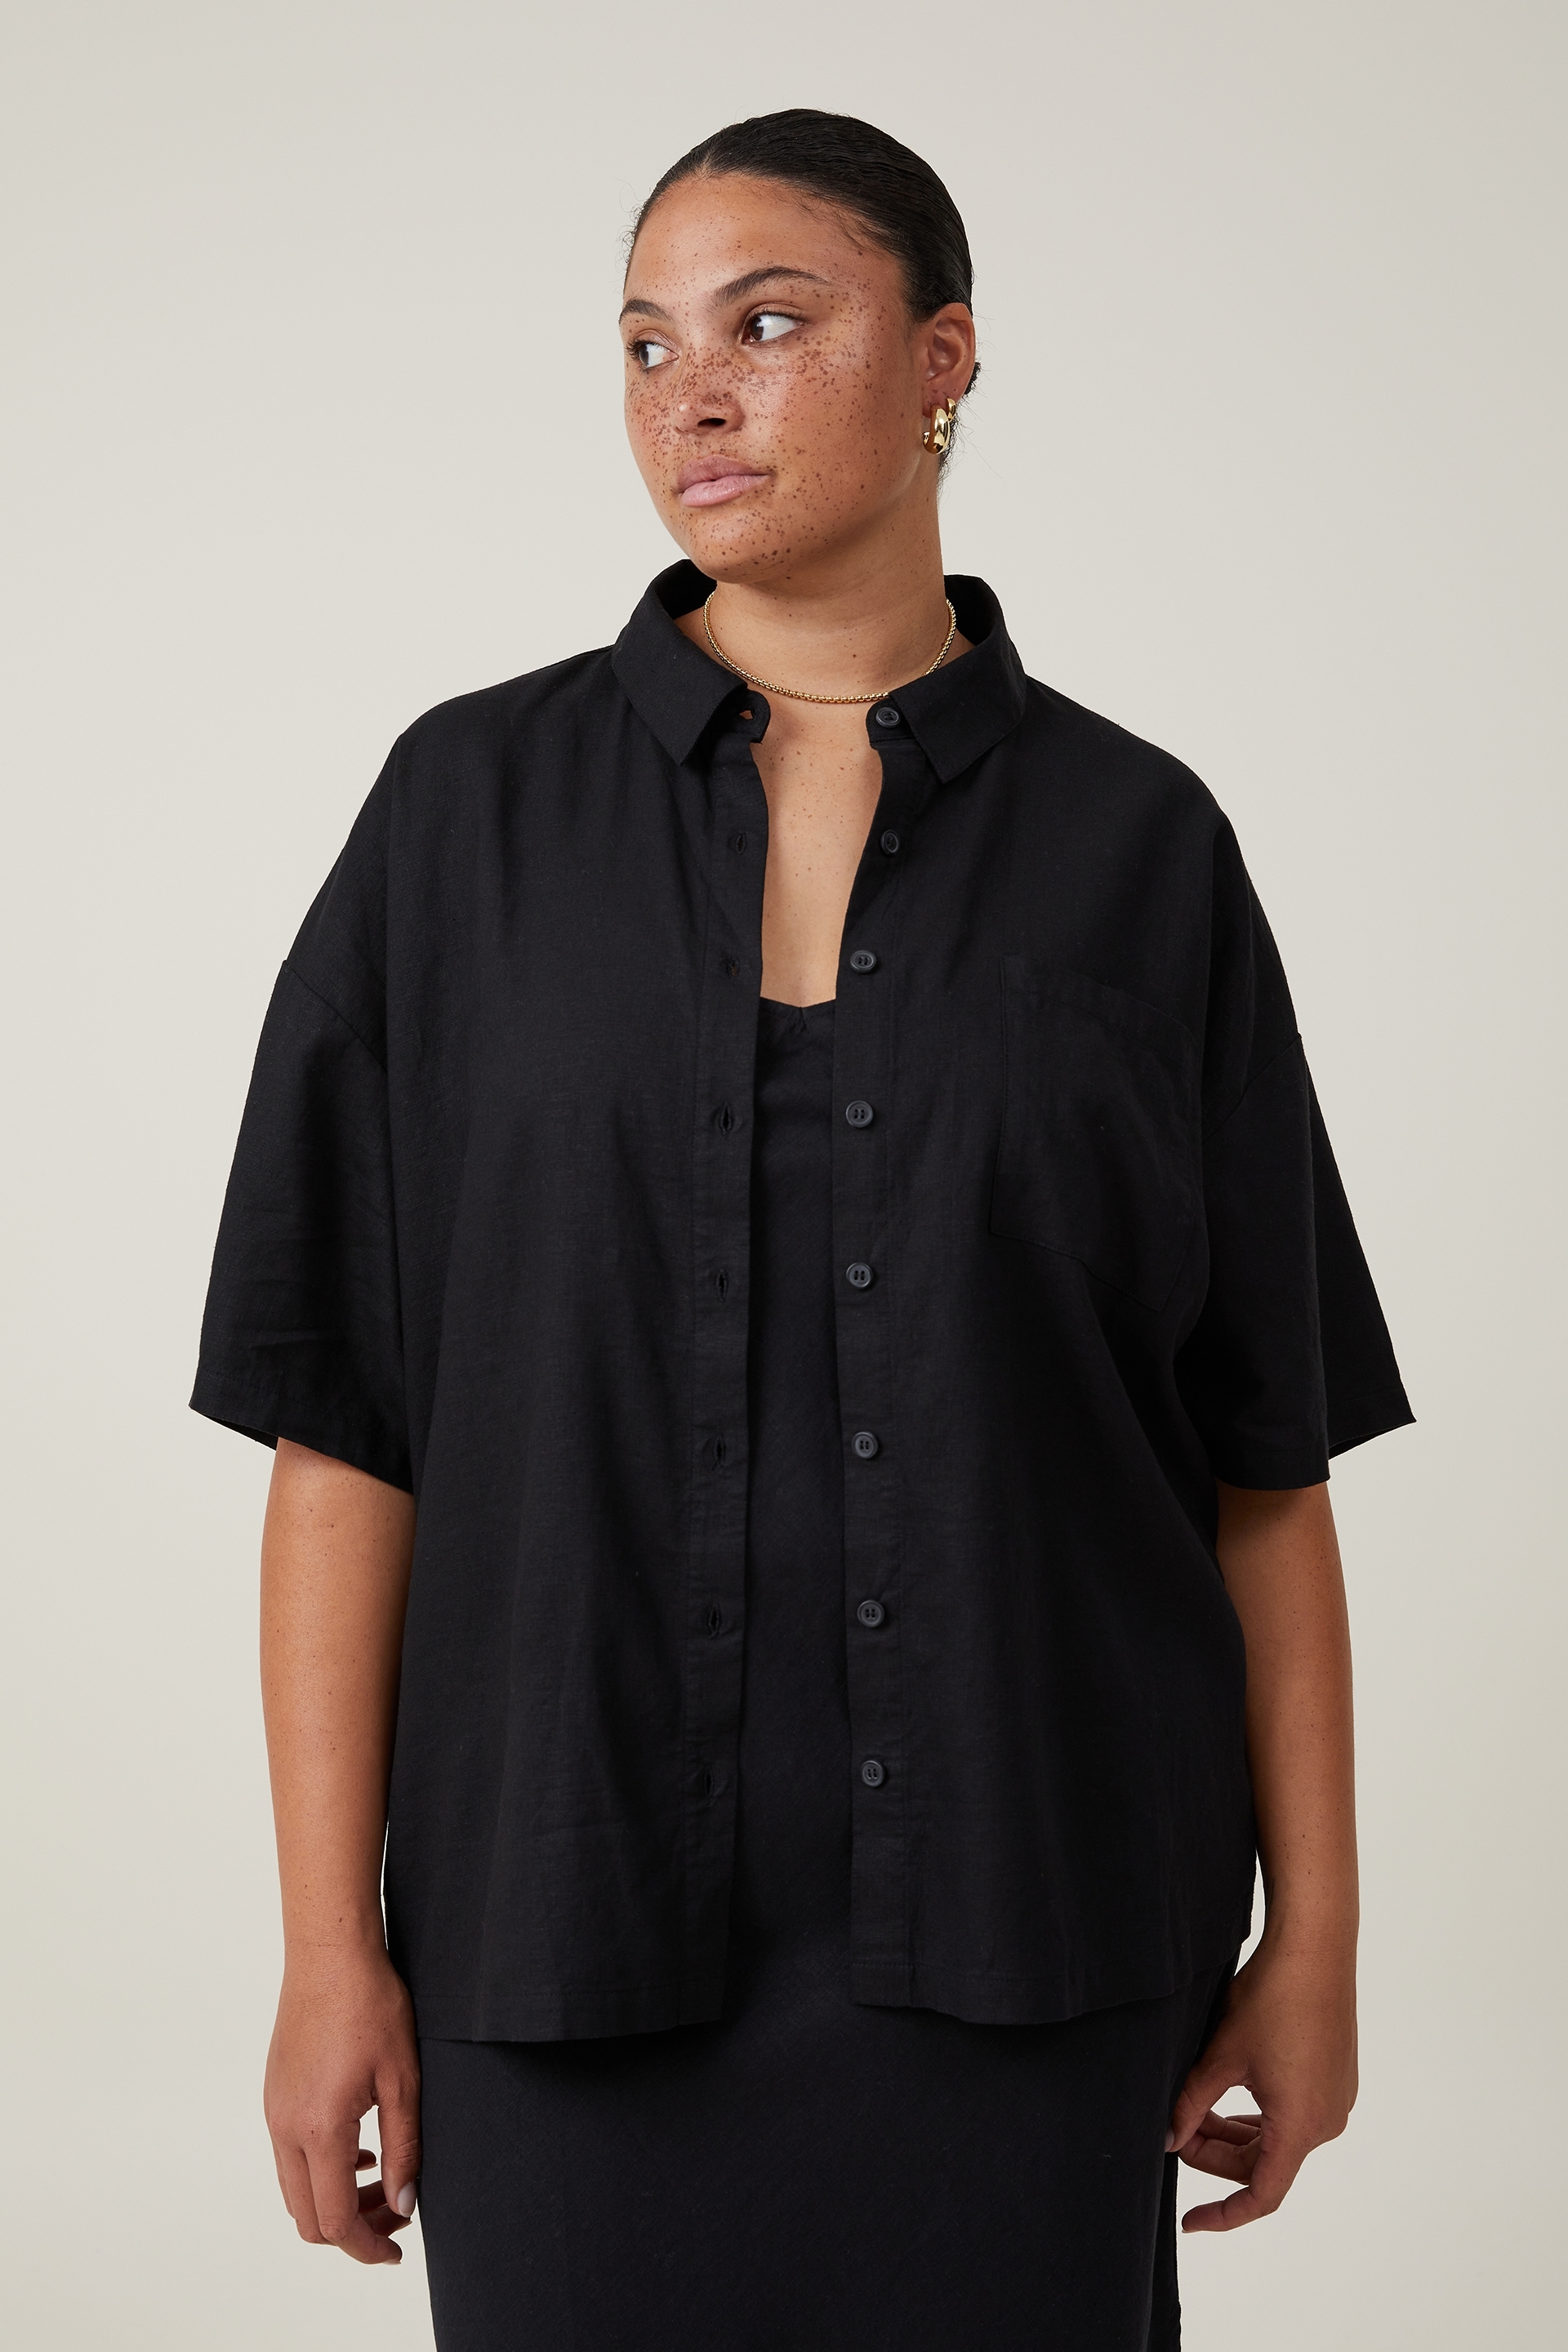 Cotton On Women - Haven Short Sleeve Shirt - Black